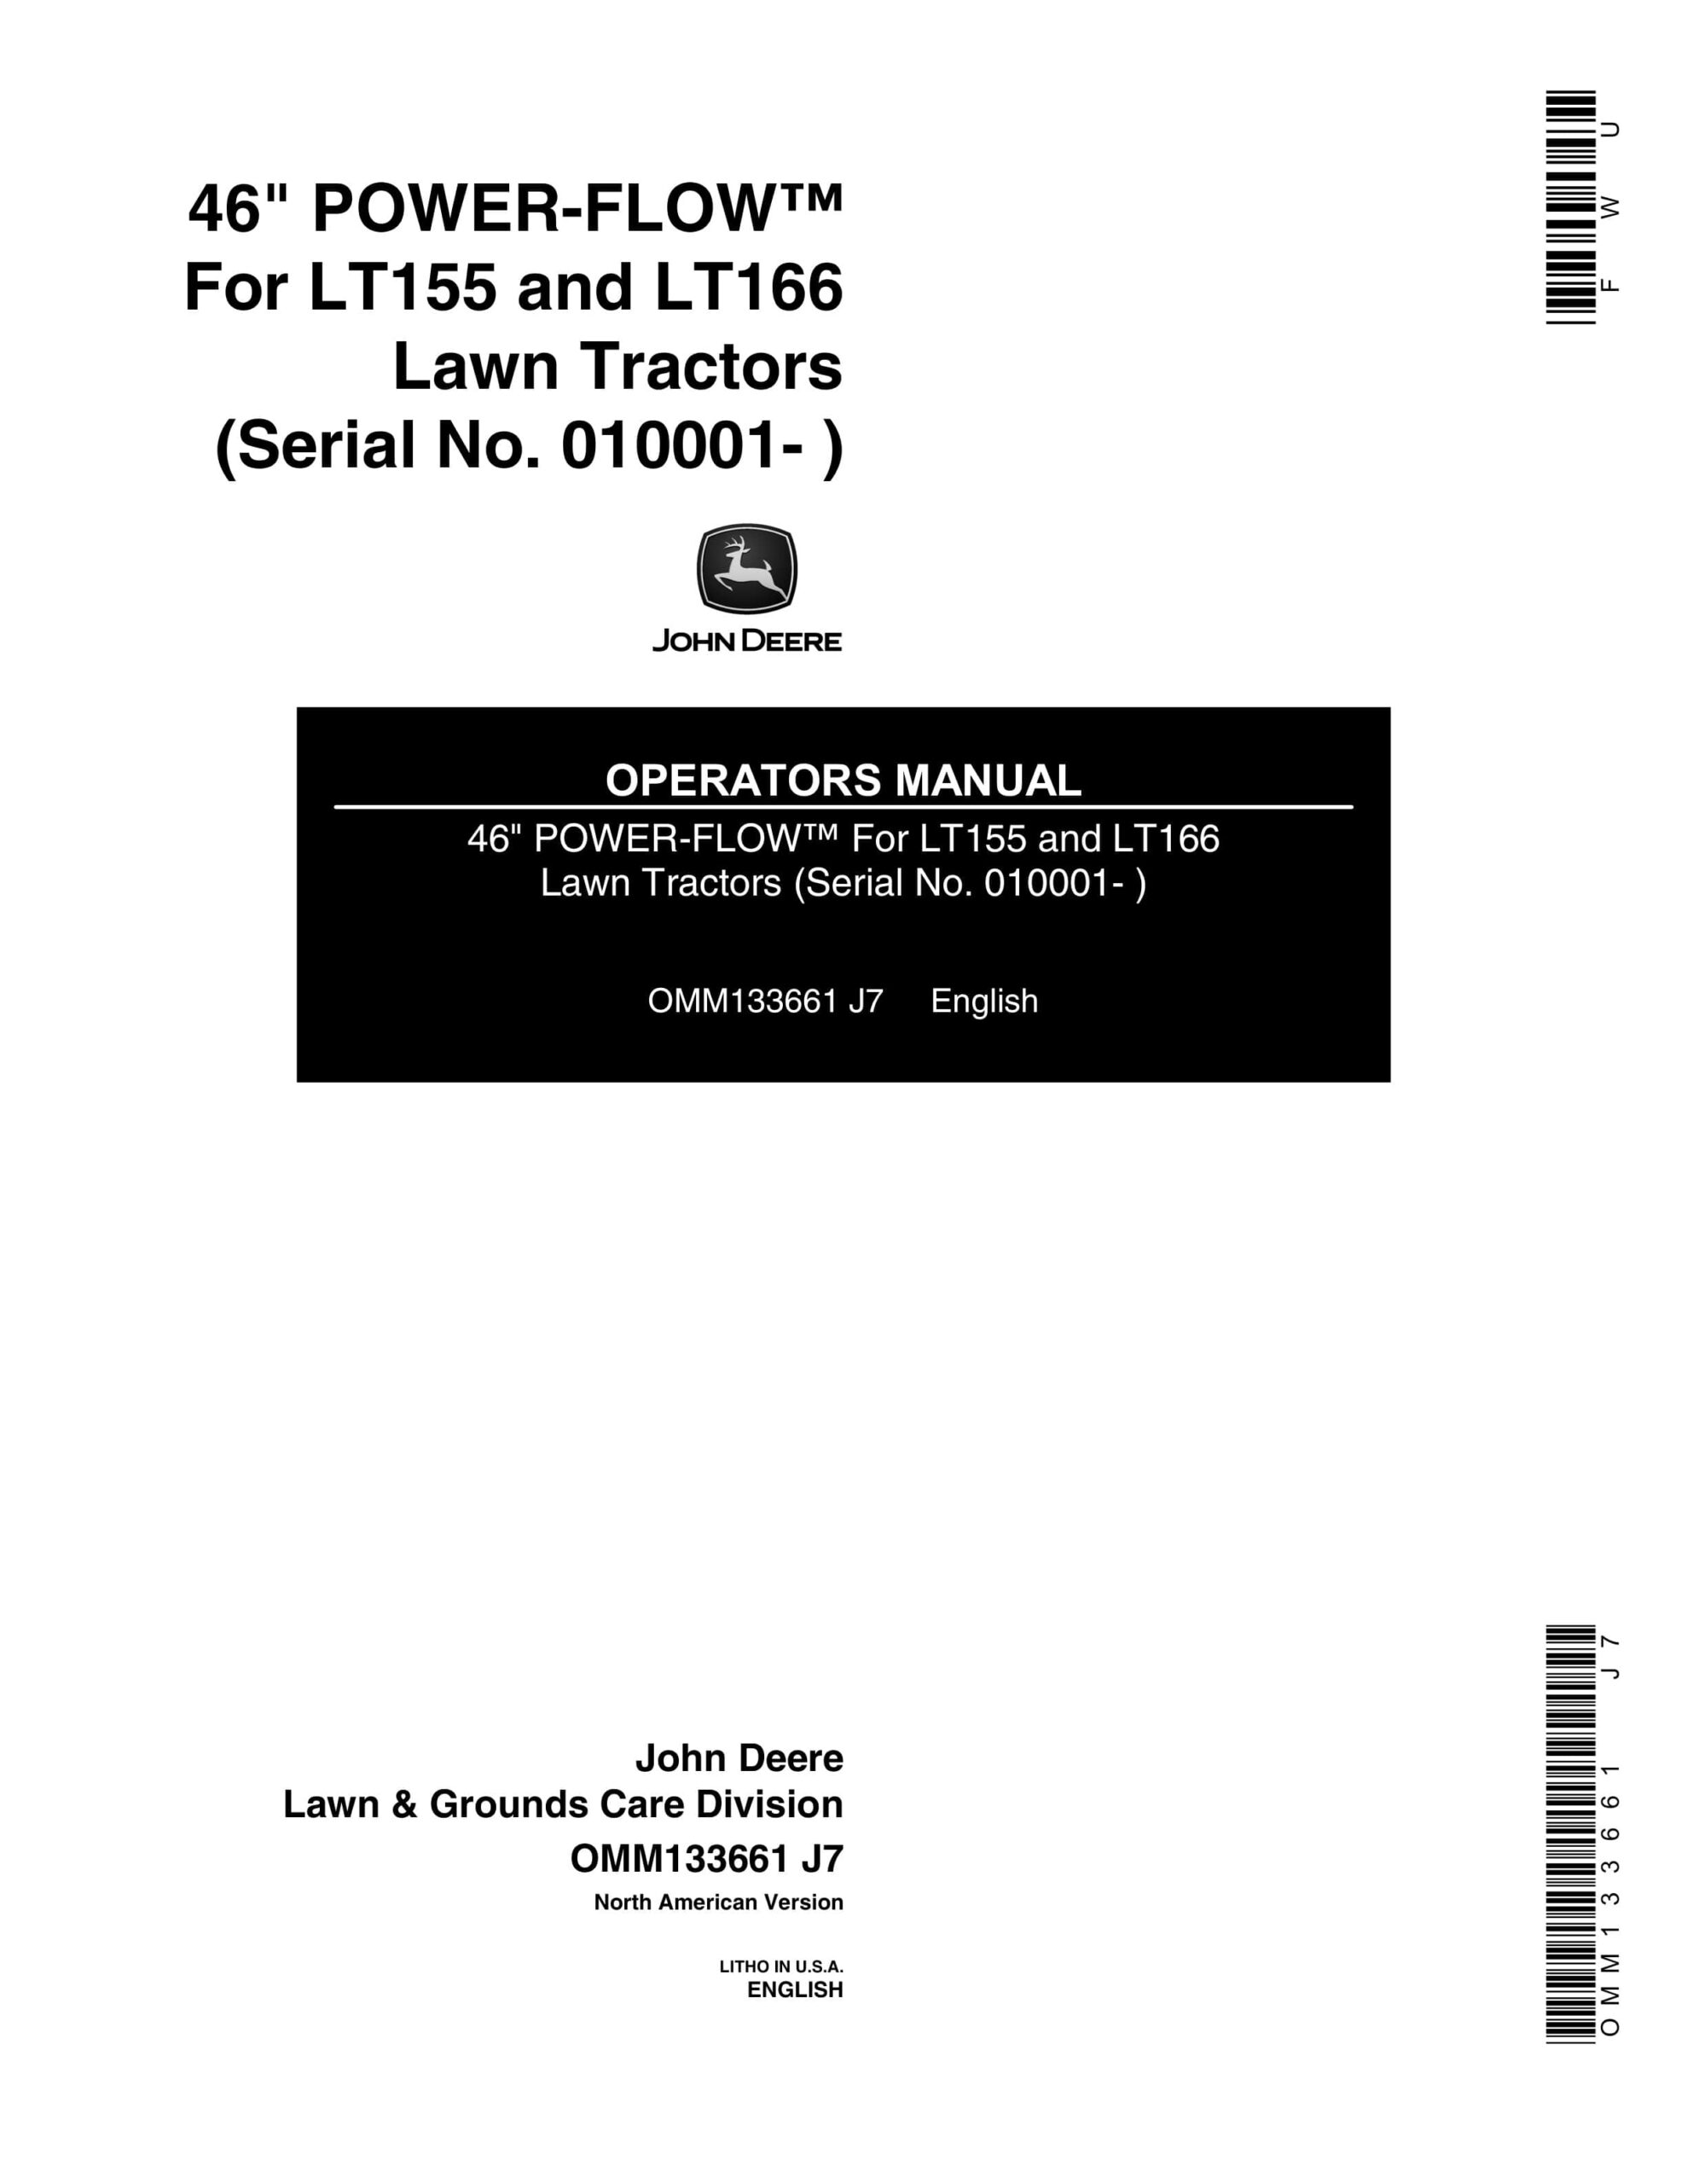 John Deere 46 POWER-FLOW For LT155 and LT166 Lawn Tractors Operator Manual OMM133661-1